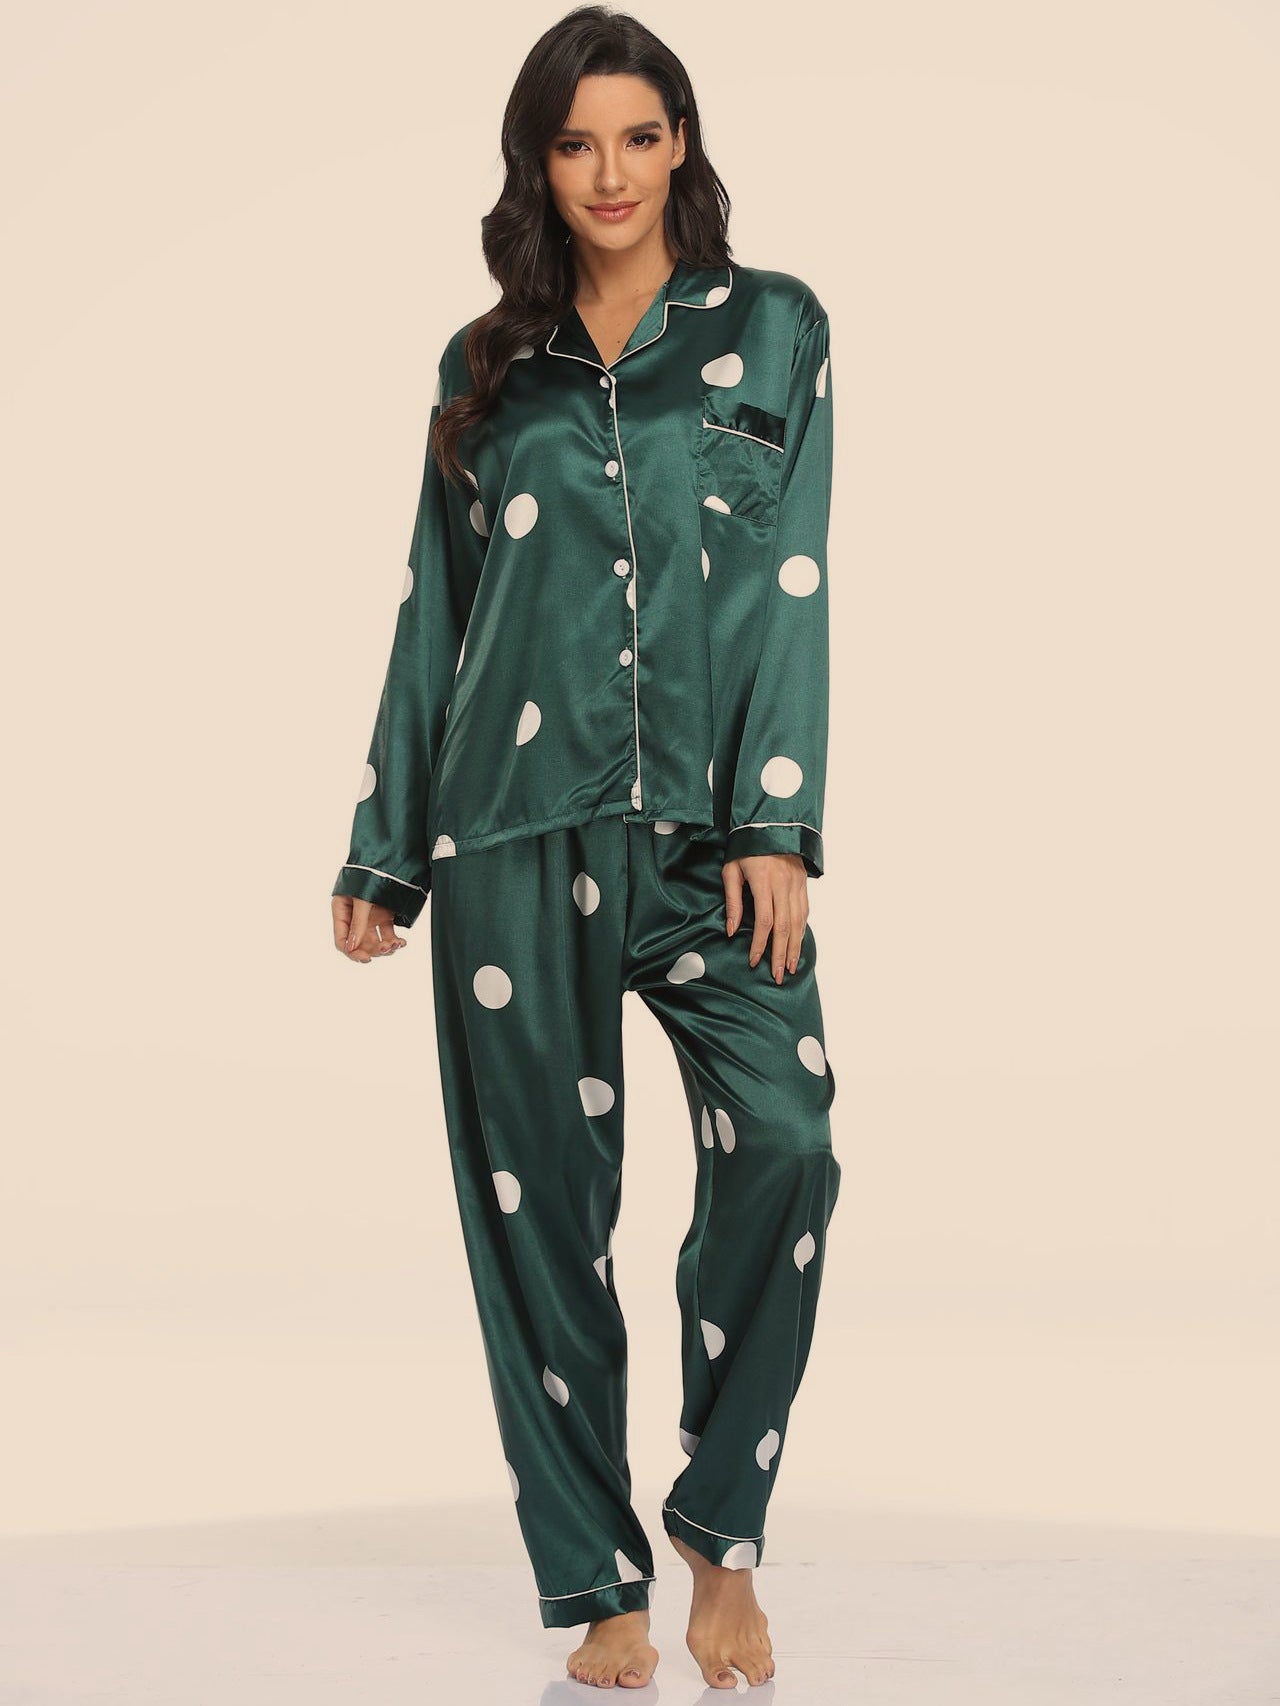 Women's Print Pajama Set Long Sleeve Tops And Pants Loungewear Sleepwear